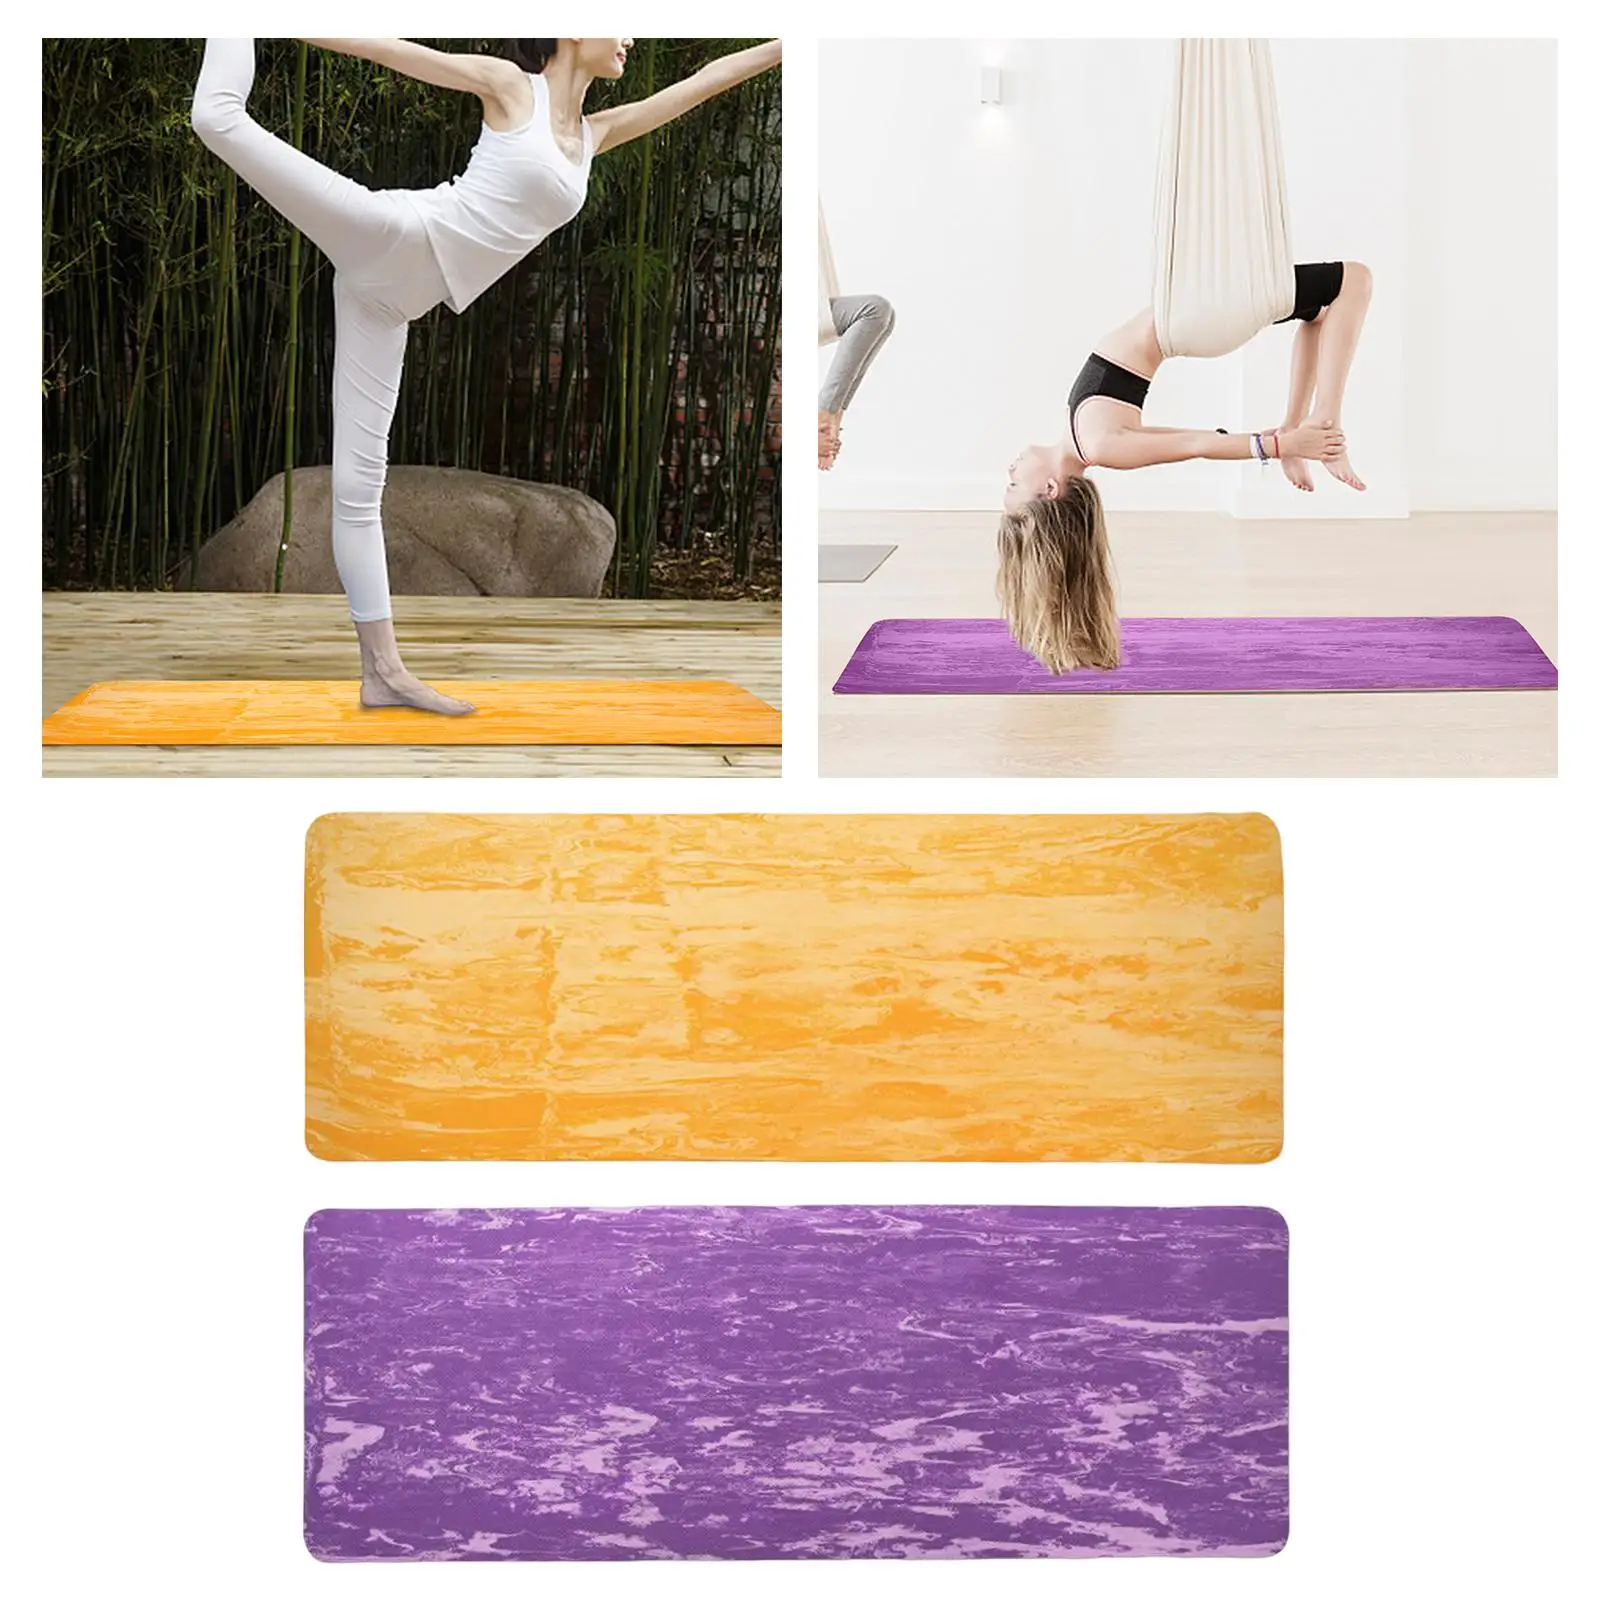 Exercise yoga mats, Pilates fitness equipment, portable, tear-resistant,